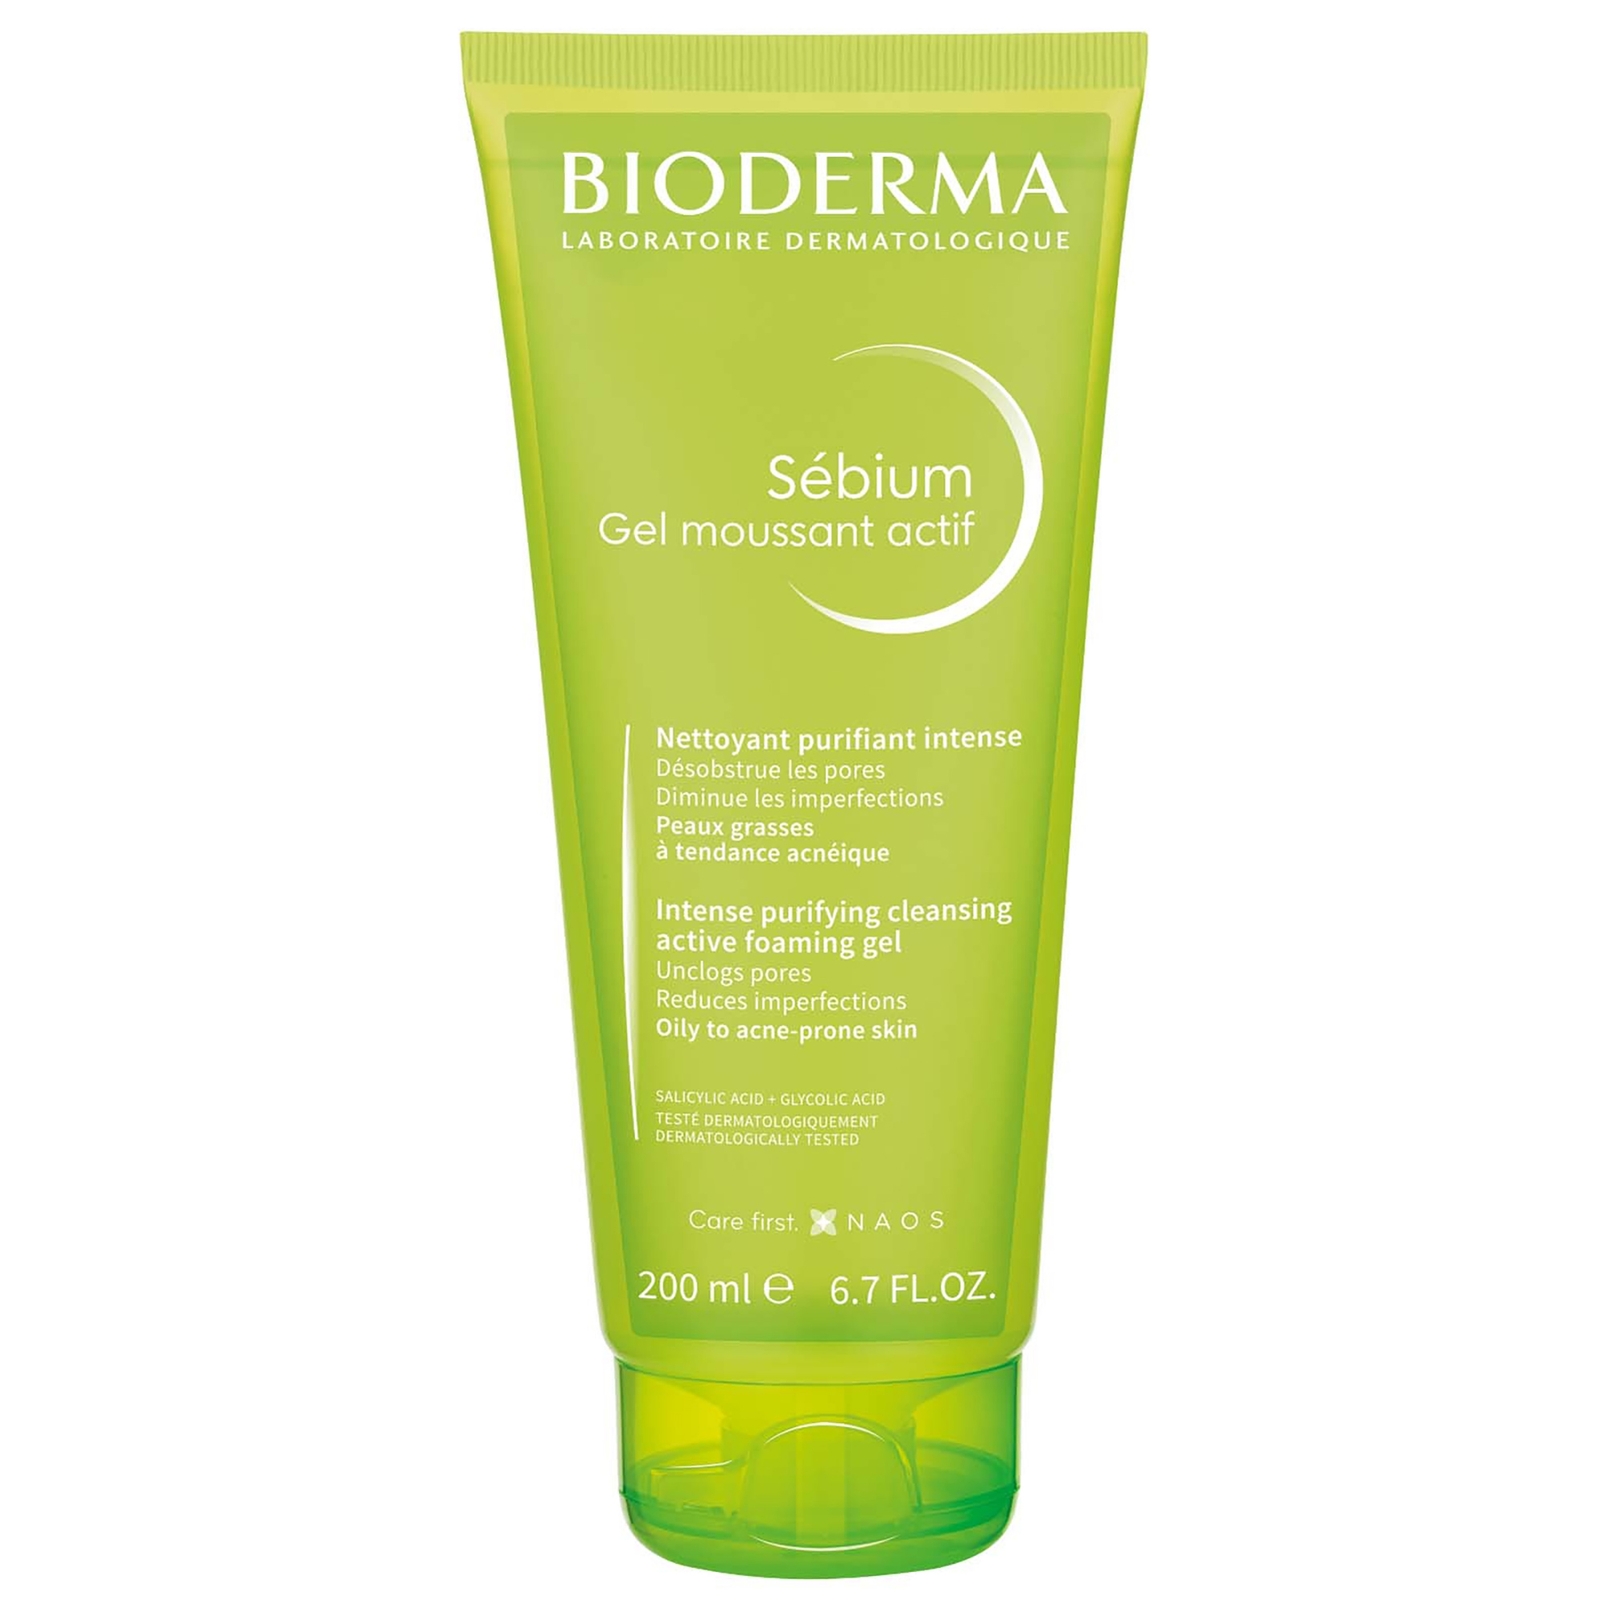 Photos - Facial / Body Cleansing Product Bioderma Sebium Actif Intense Purifying Foaming Gel Cleanser 200ml 28667 